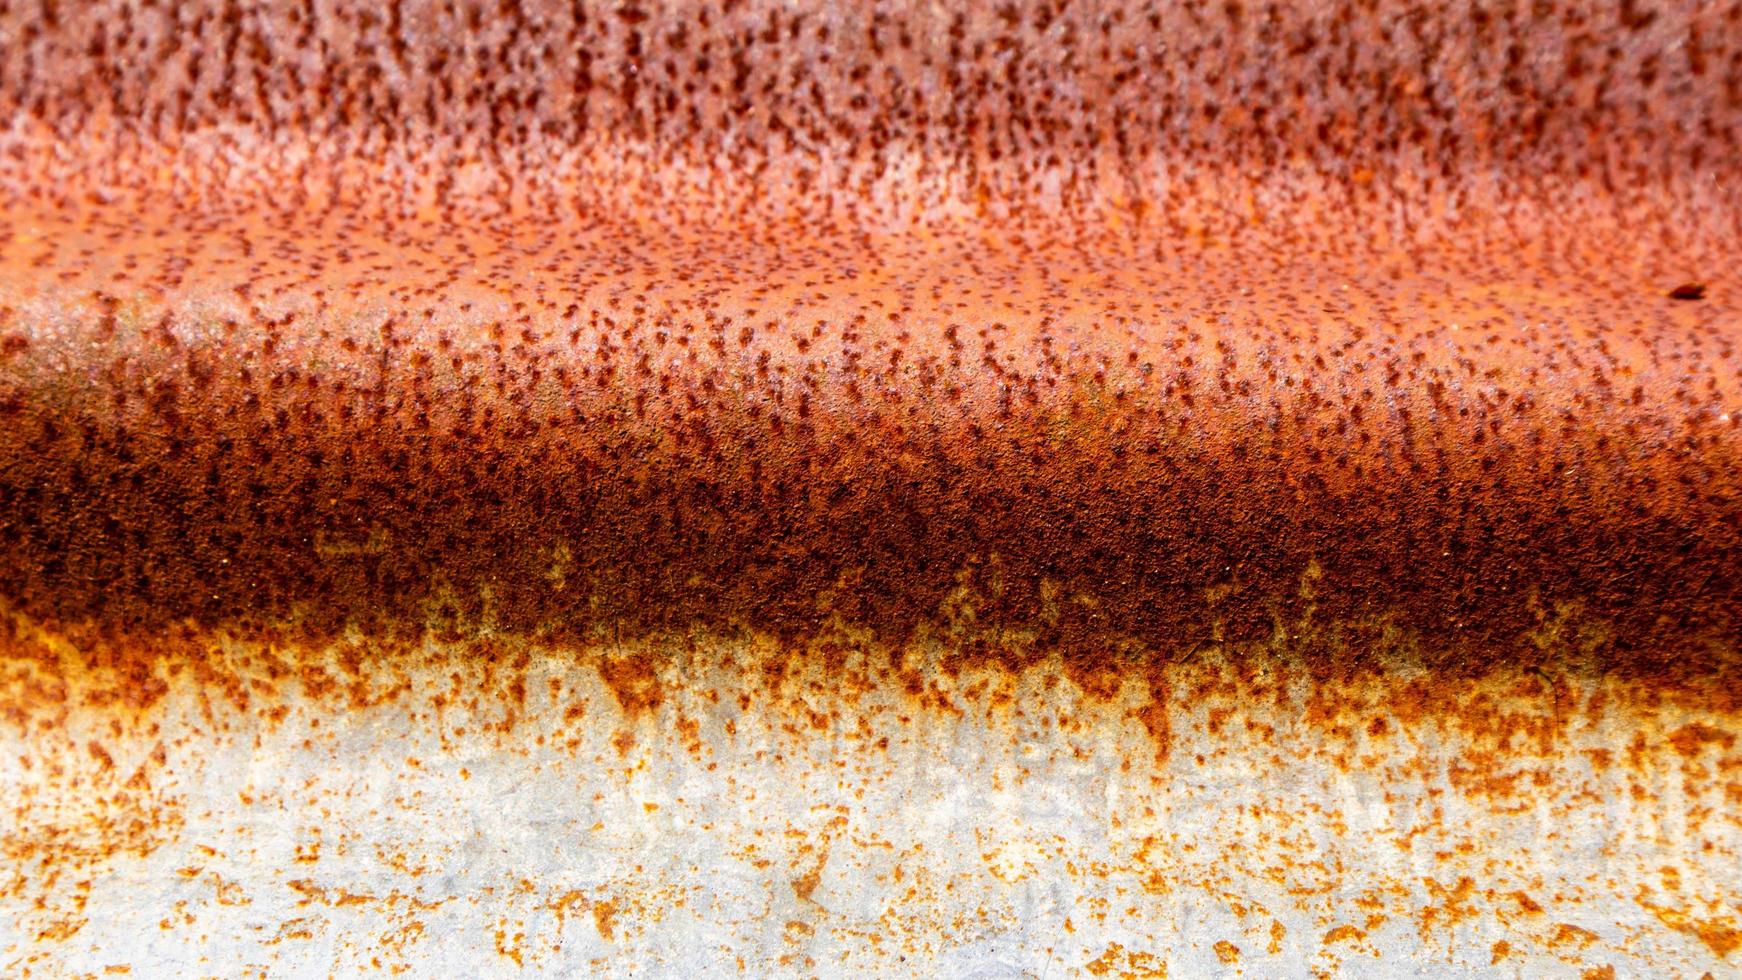 textura de zinc oxidado como fondo foto